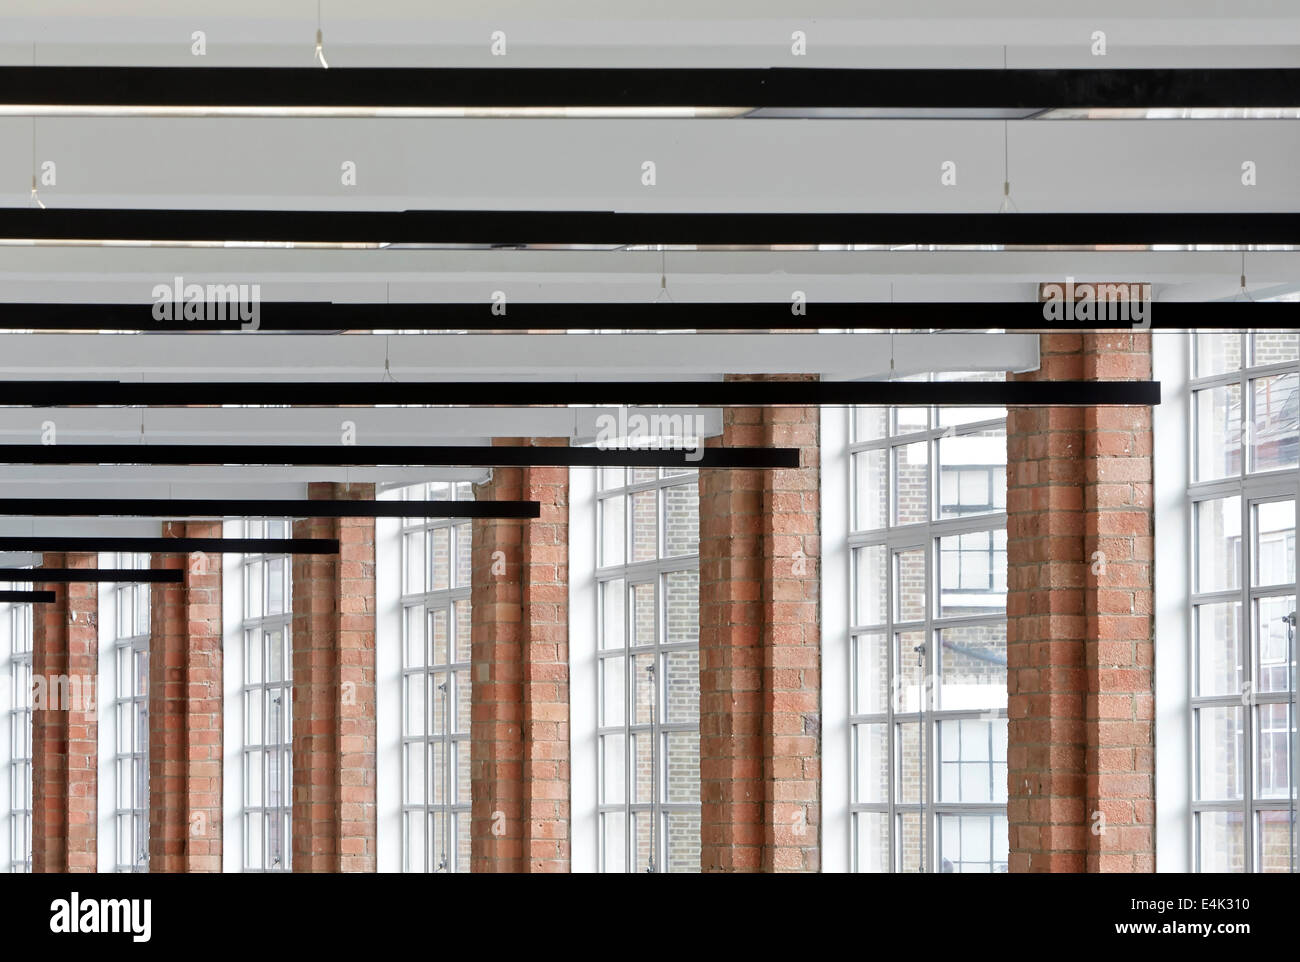 Buckley Building, London, United Kingdom. Architect: BuckleyGrayYeoman, 2014. Detailed perspective of original brickwork and fen Stock Photo